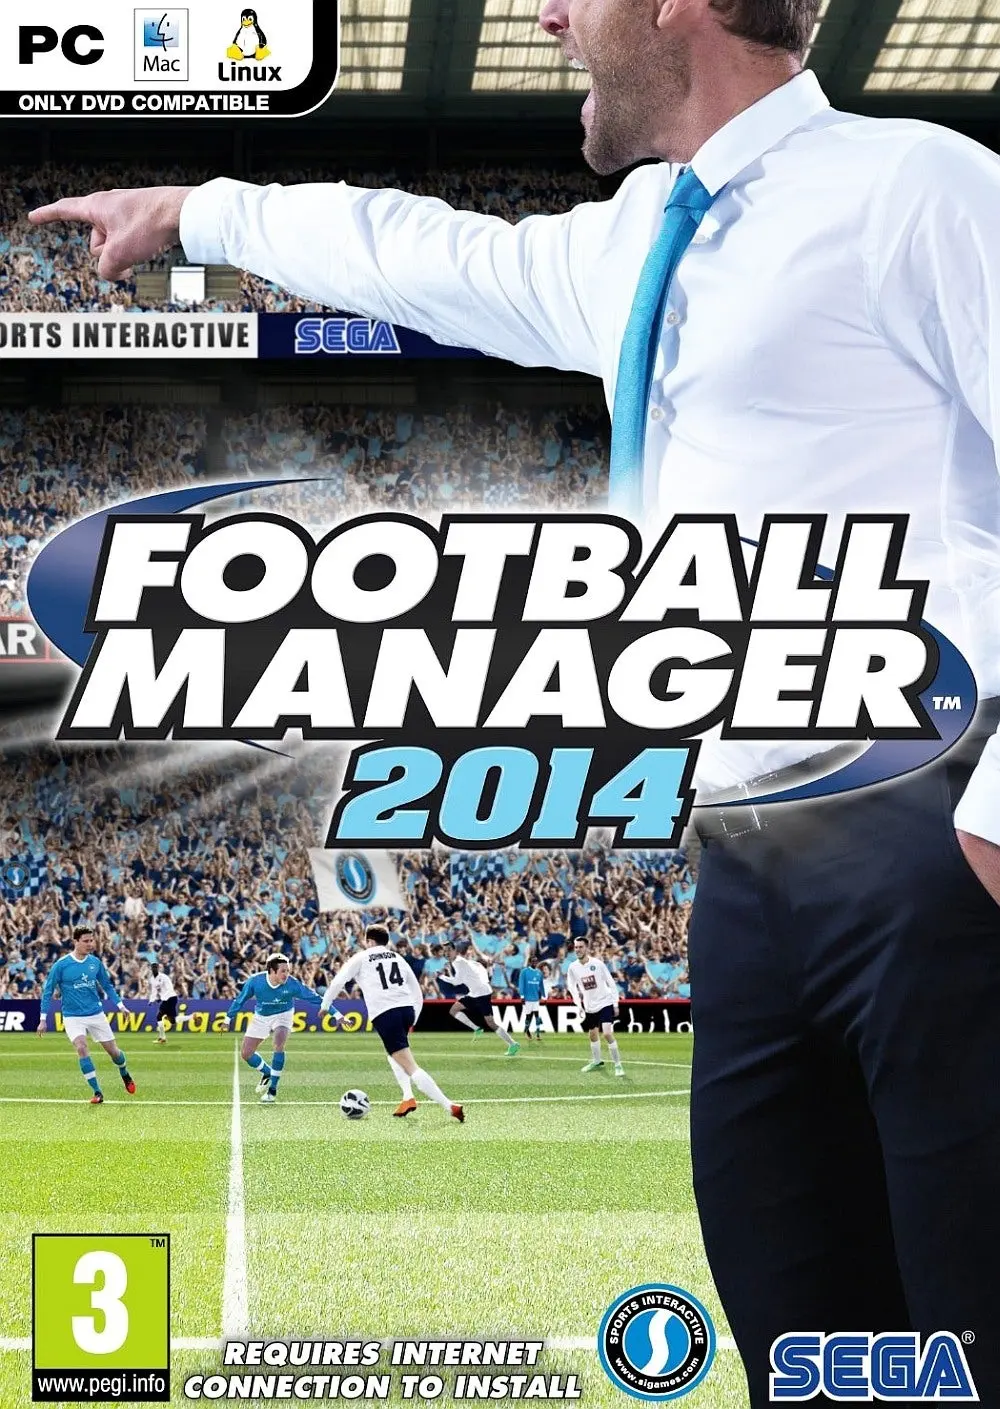 Football Manager 2014 (EU) (PC / Mac / Linux) - Steam- Digital Code